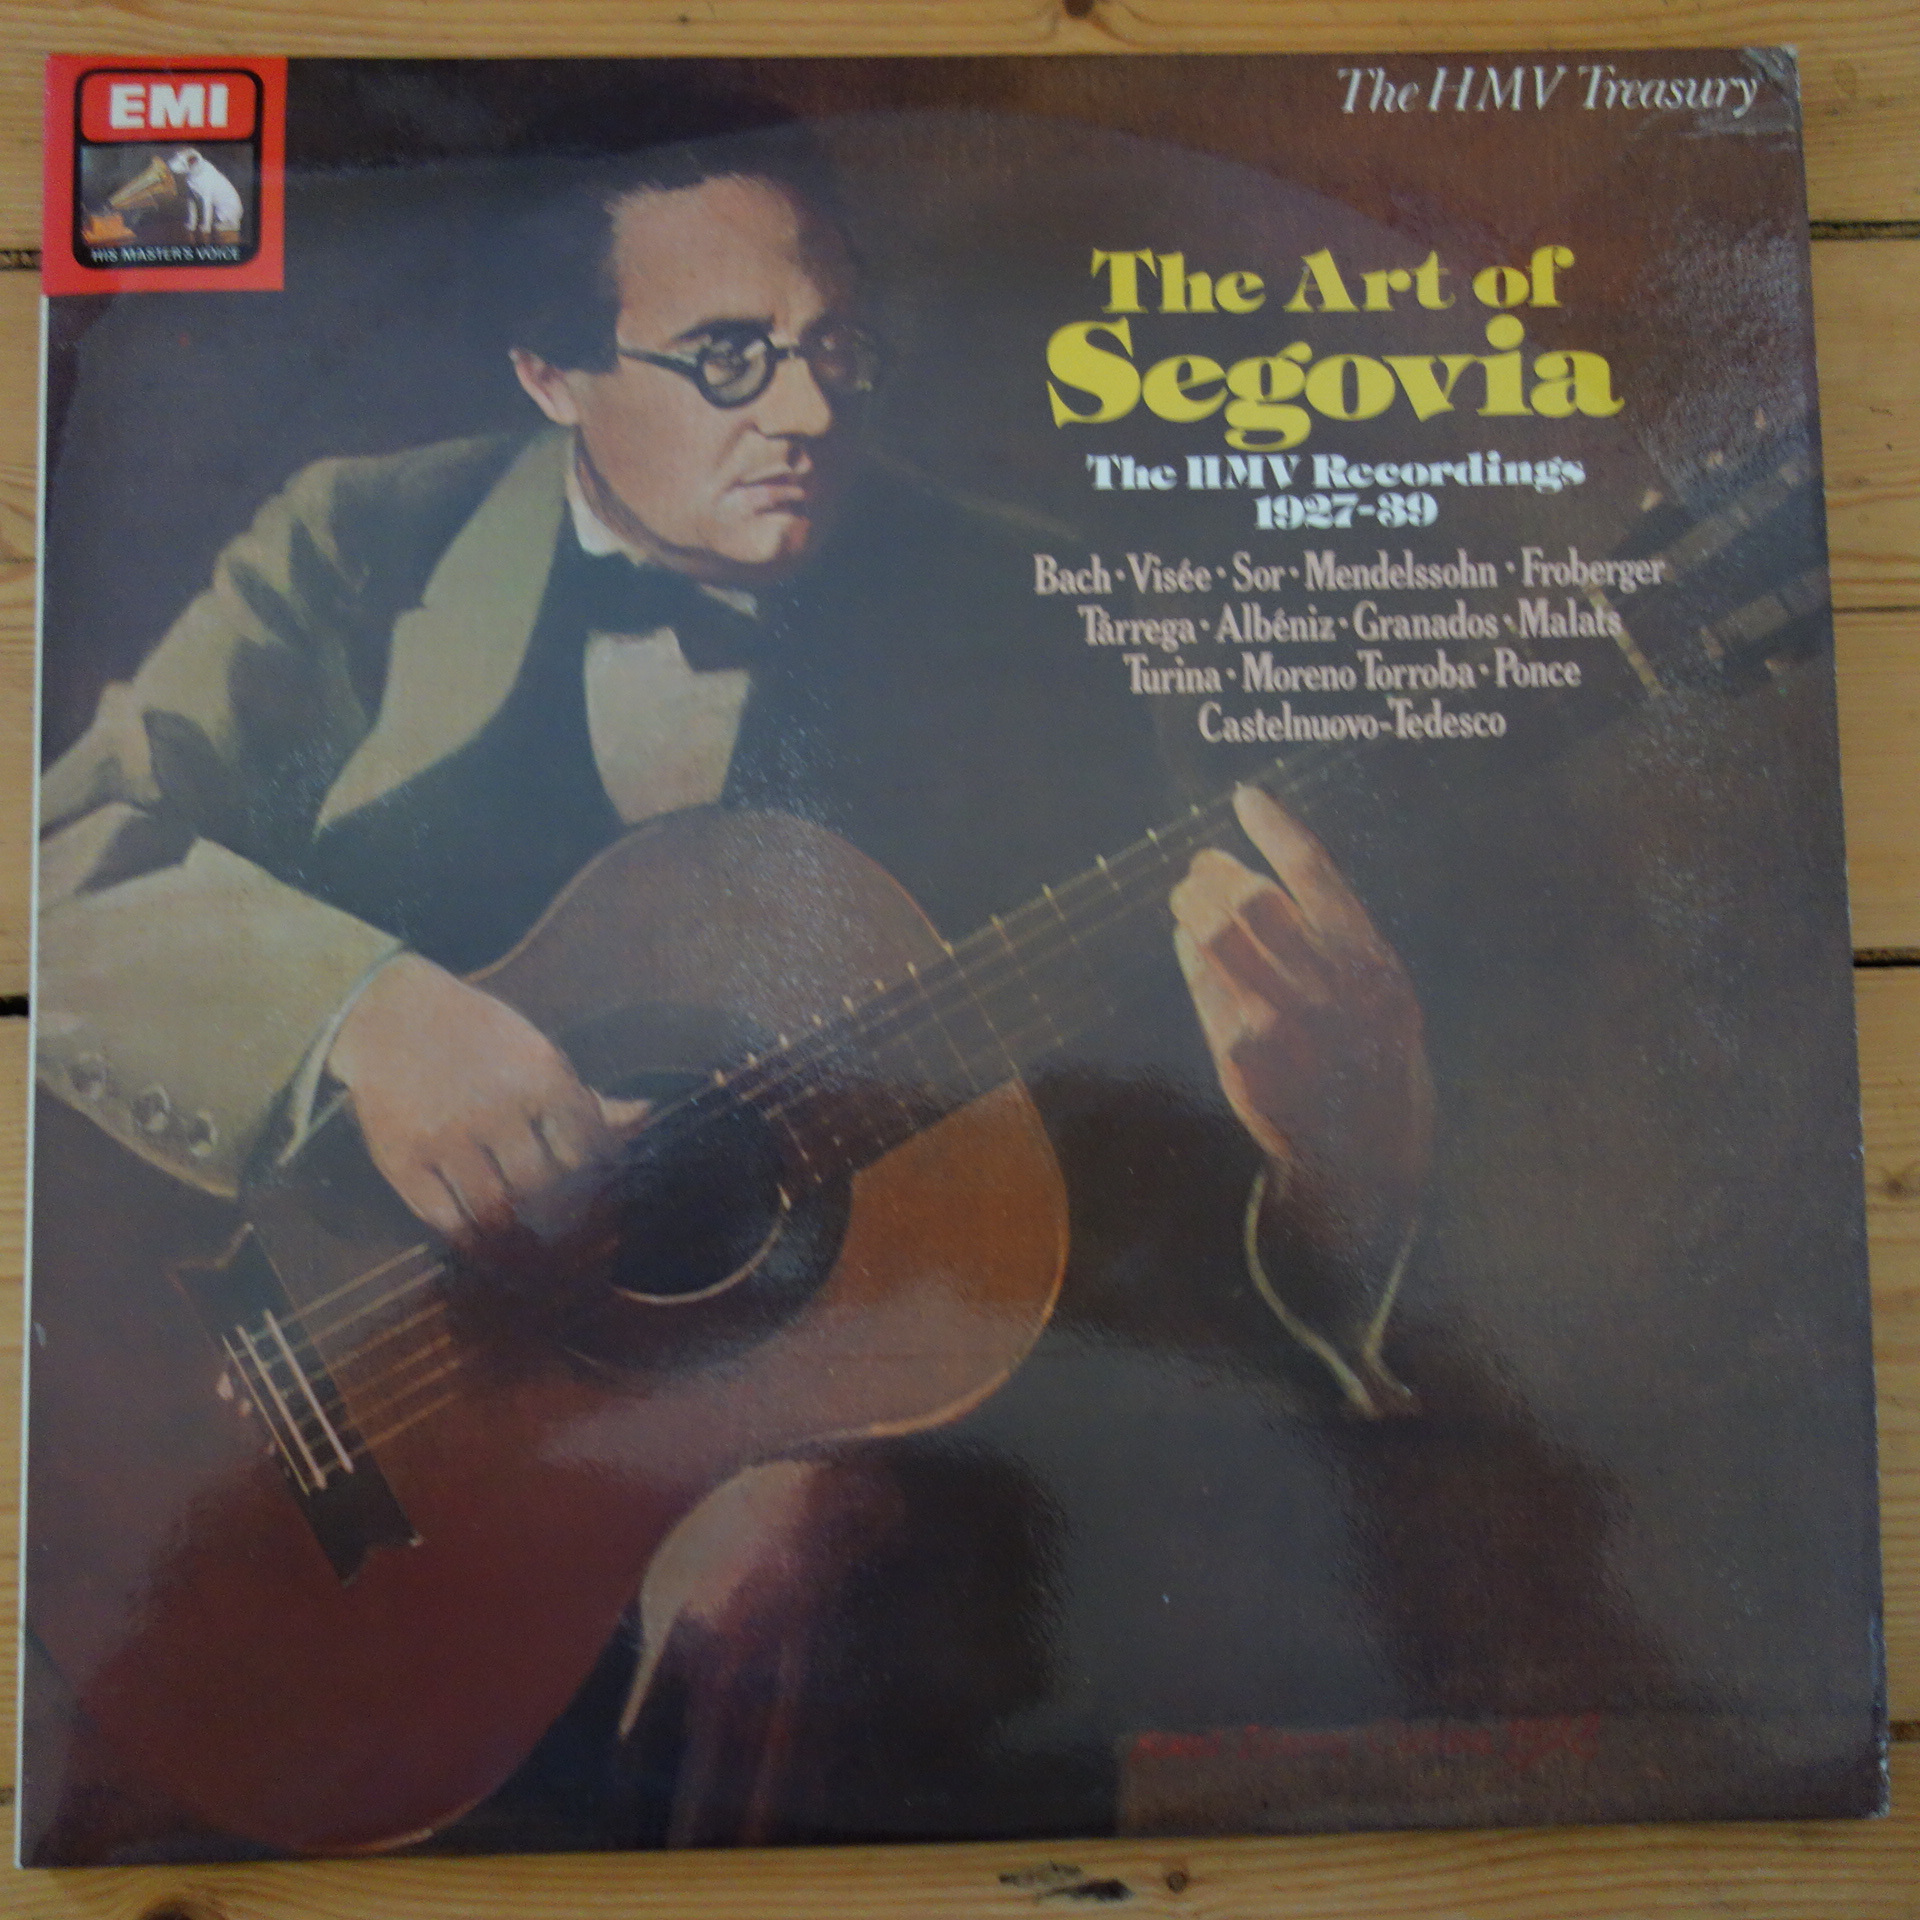 RLS 745 The Art of Segovia HMV Recordings 1927-39